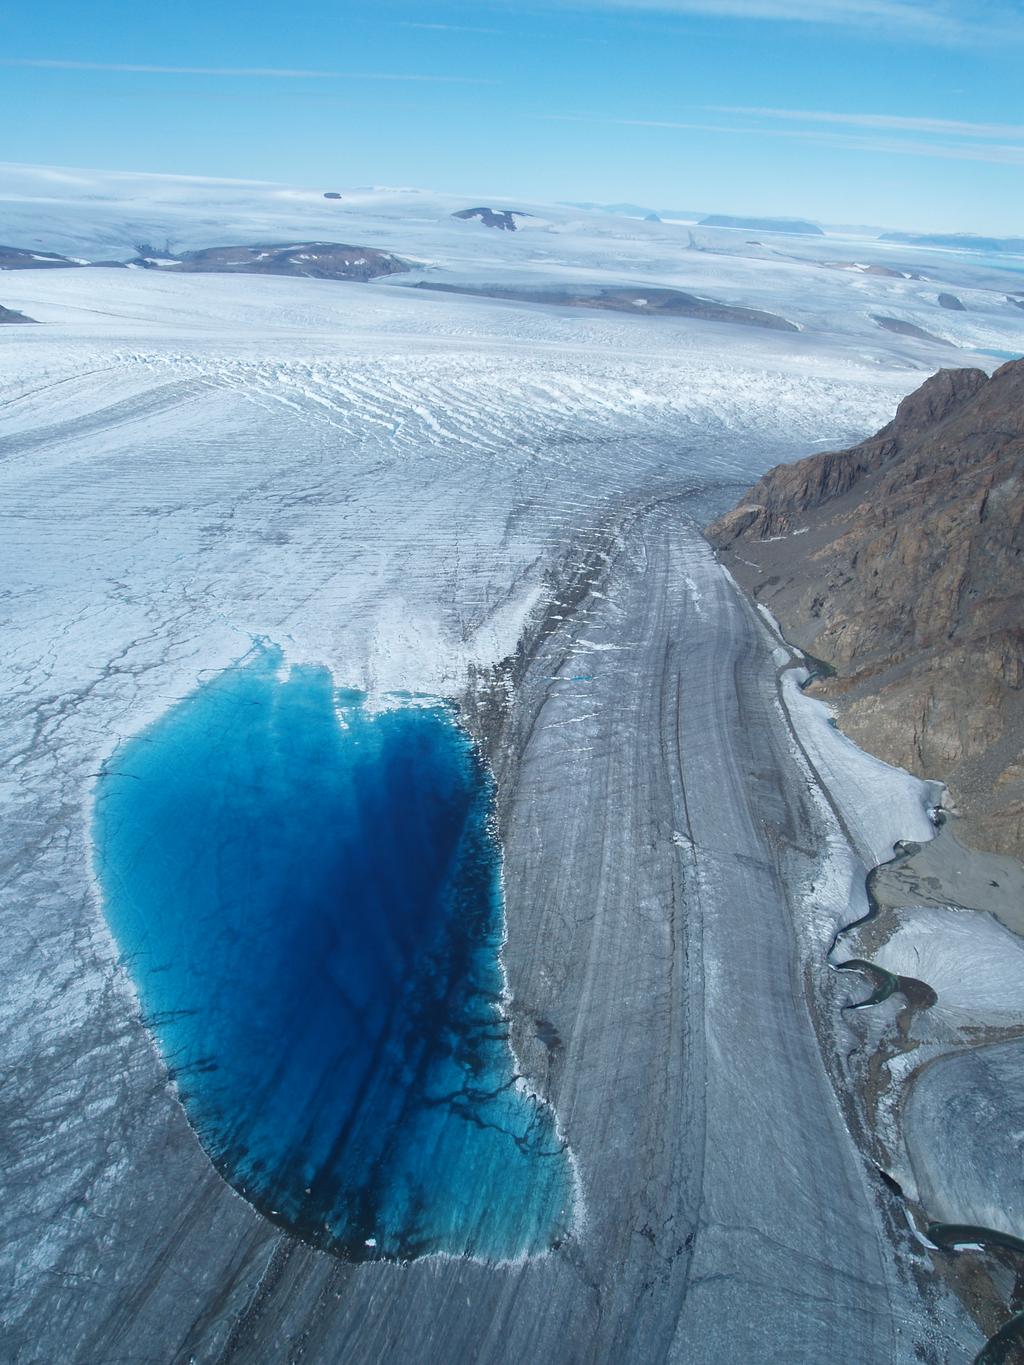 Subglacial Floods Supraglacial Lake Drainage Event Das et al. Science, 2008 Supraglacial lake of volume 0.044 km3 Drains through 980 m of ice in 1.4 h 1.